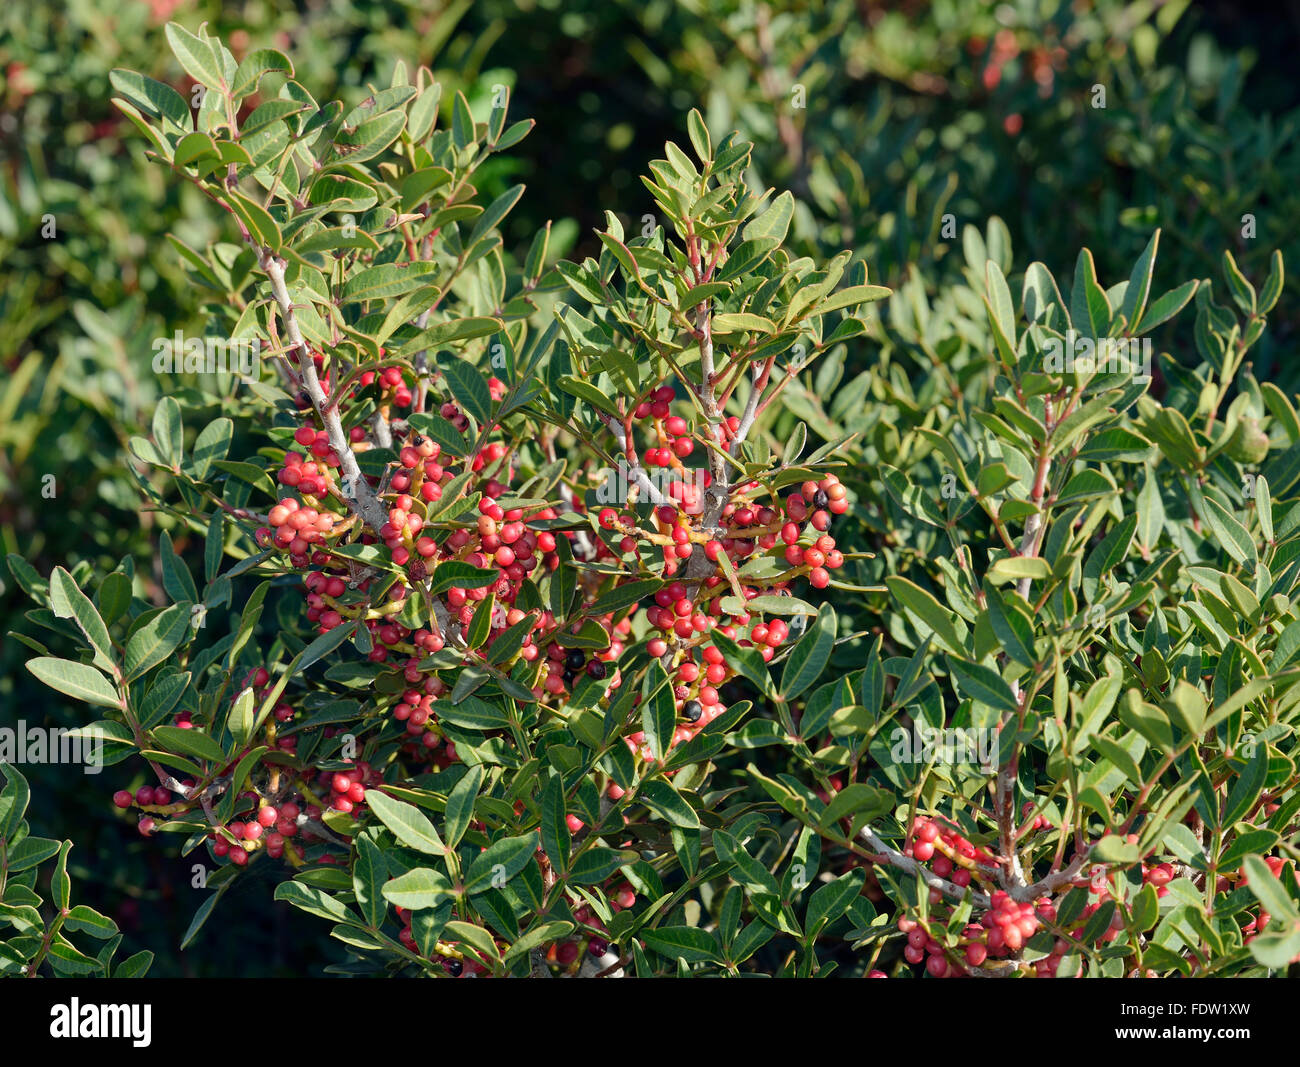 Mastic Tree - Pistacia lentiscus Evergreen Tree from Cyprus Stock Photo